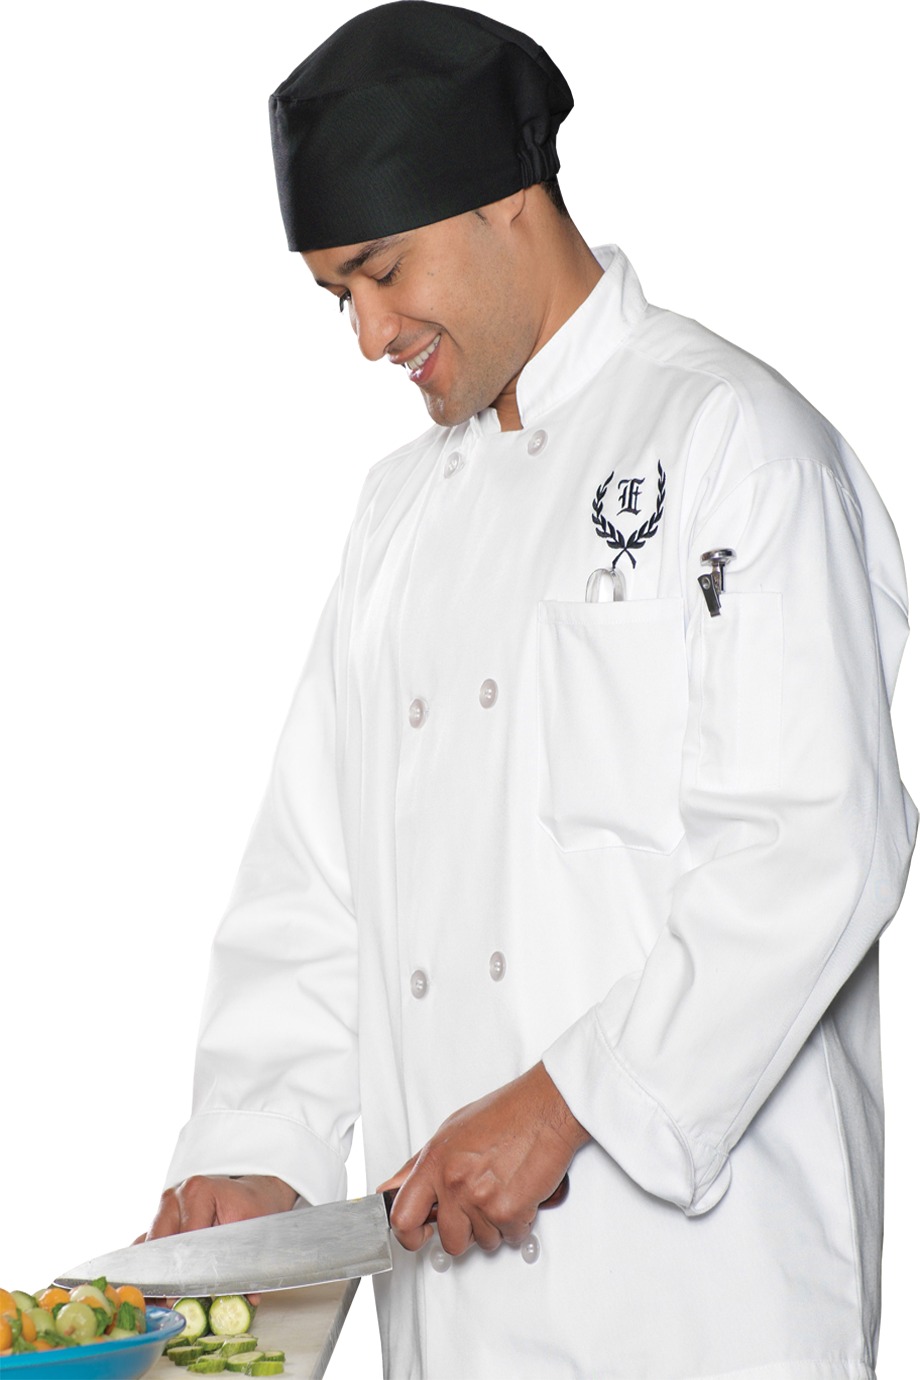 Edwards Garment 3300 - Chef Coat